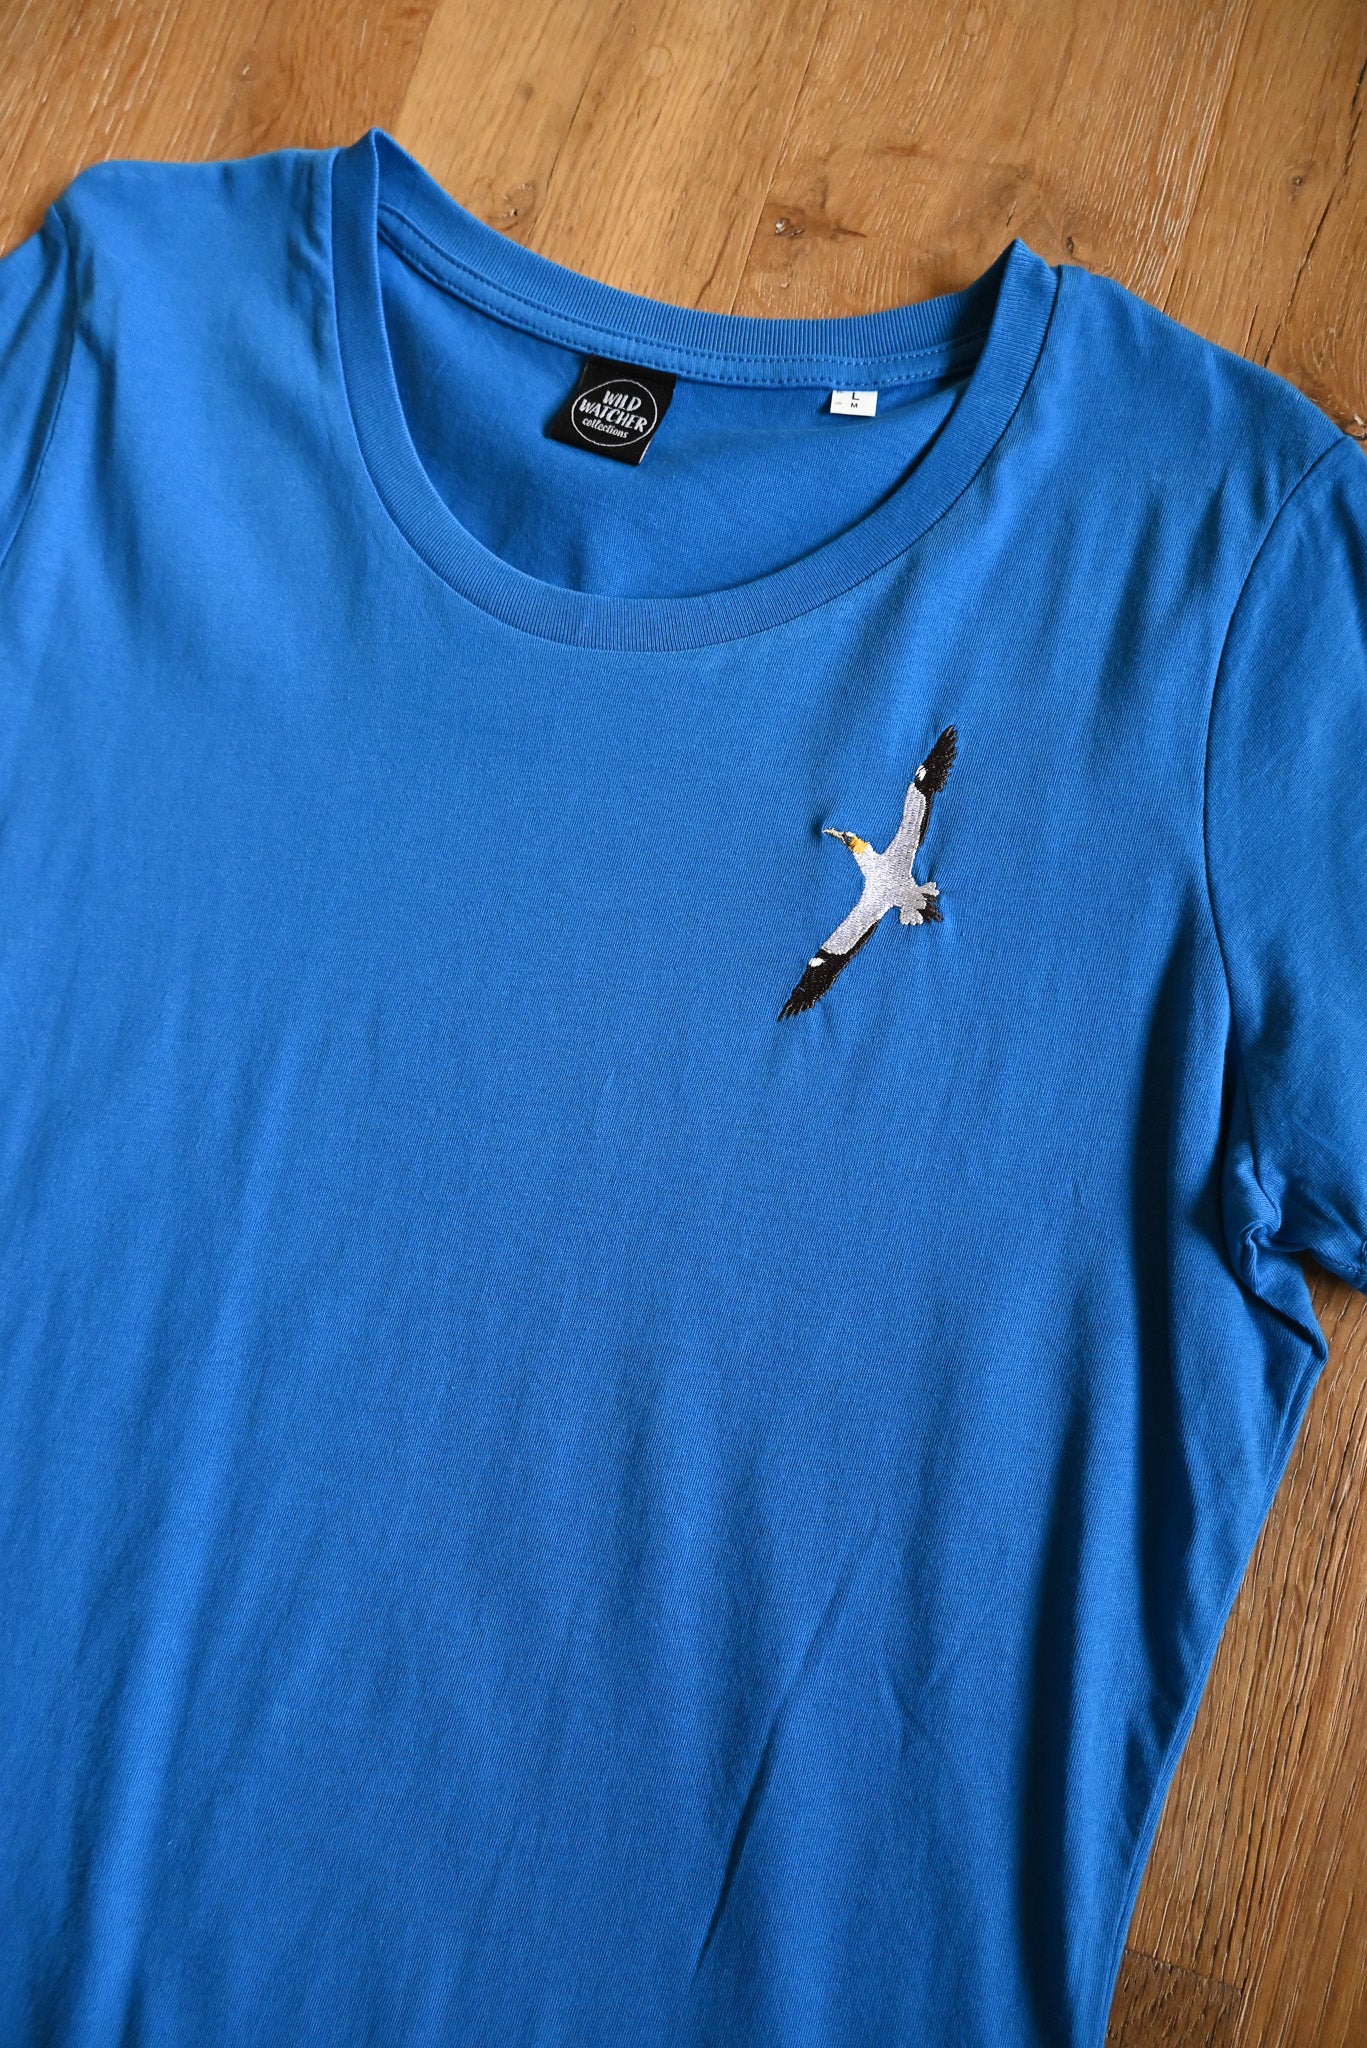 SIZE M UK 12-14 Flying Gannet & Fish Embroidered Unisex Organic Cotton T-shirt